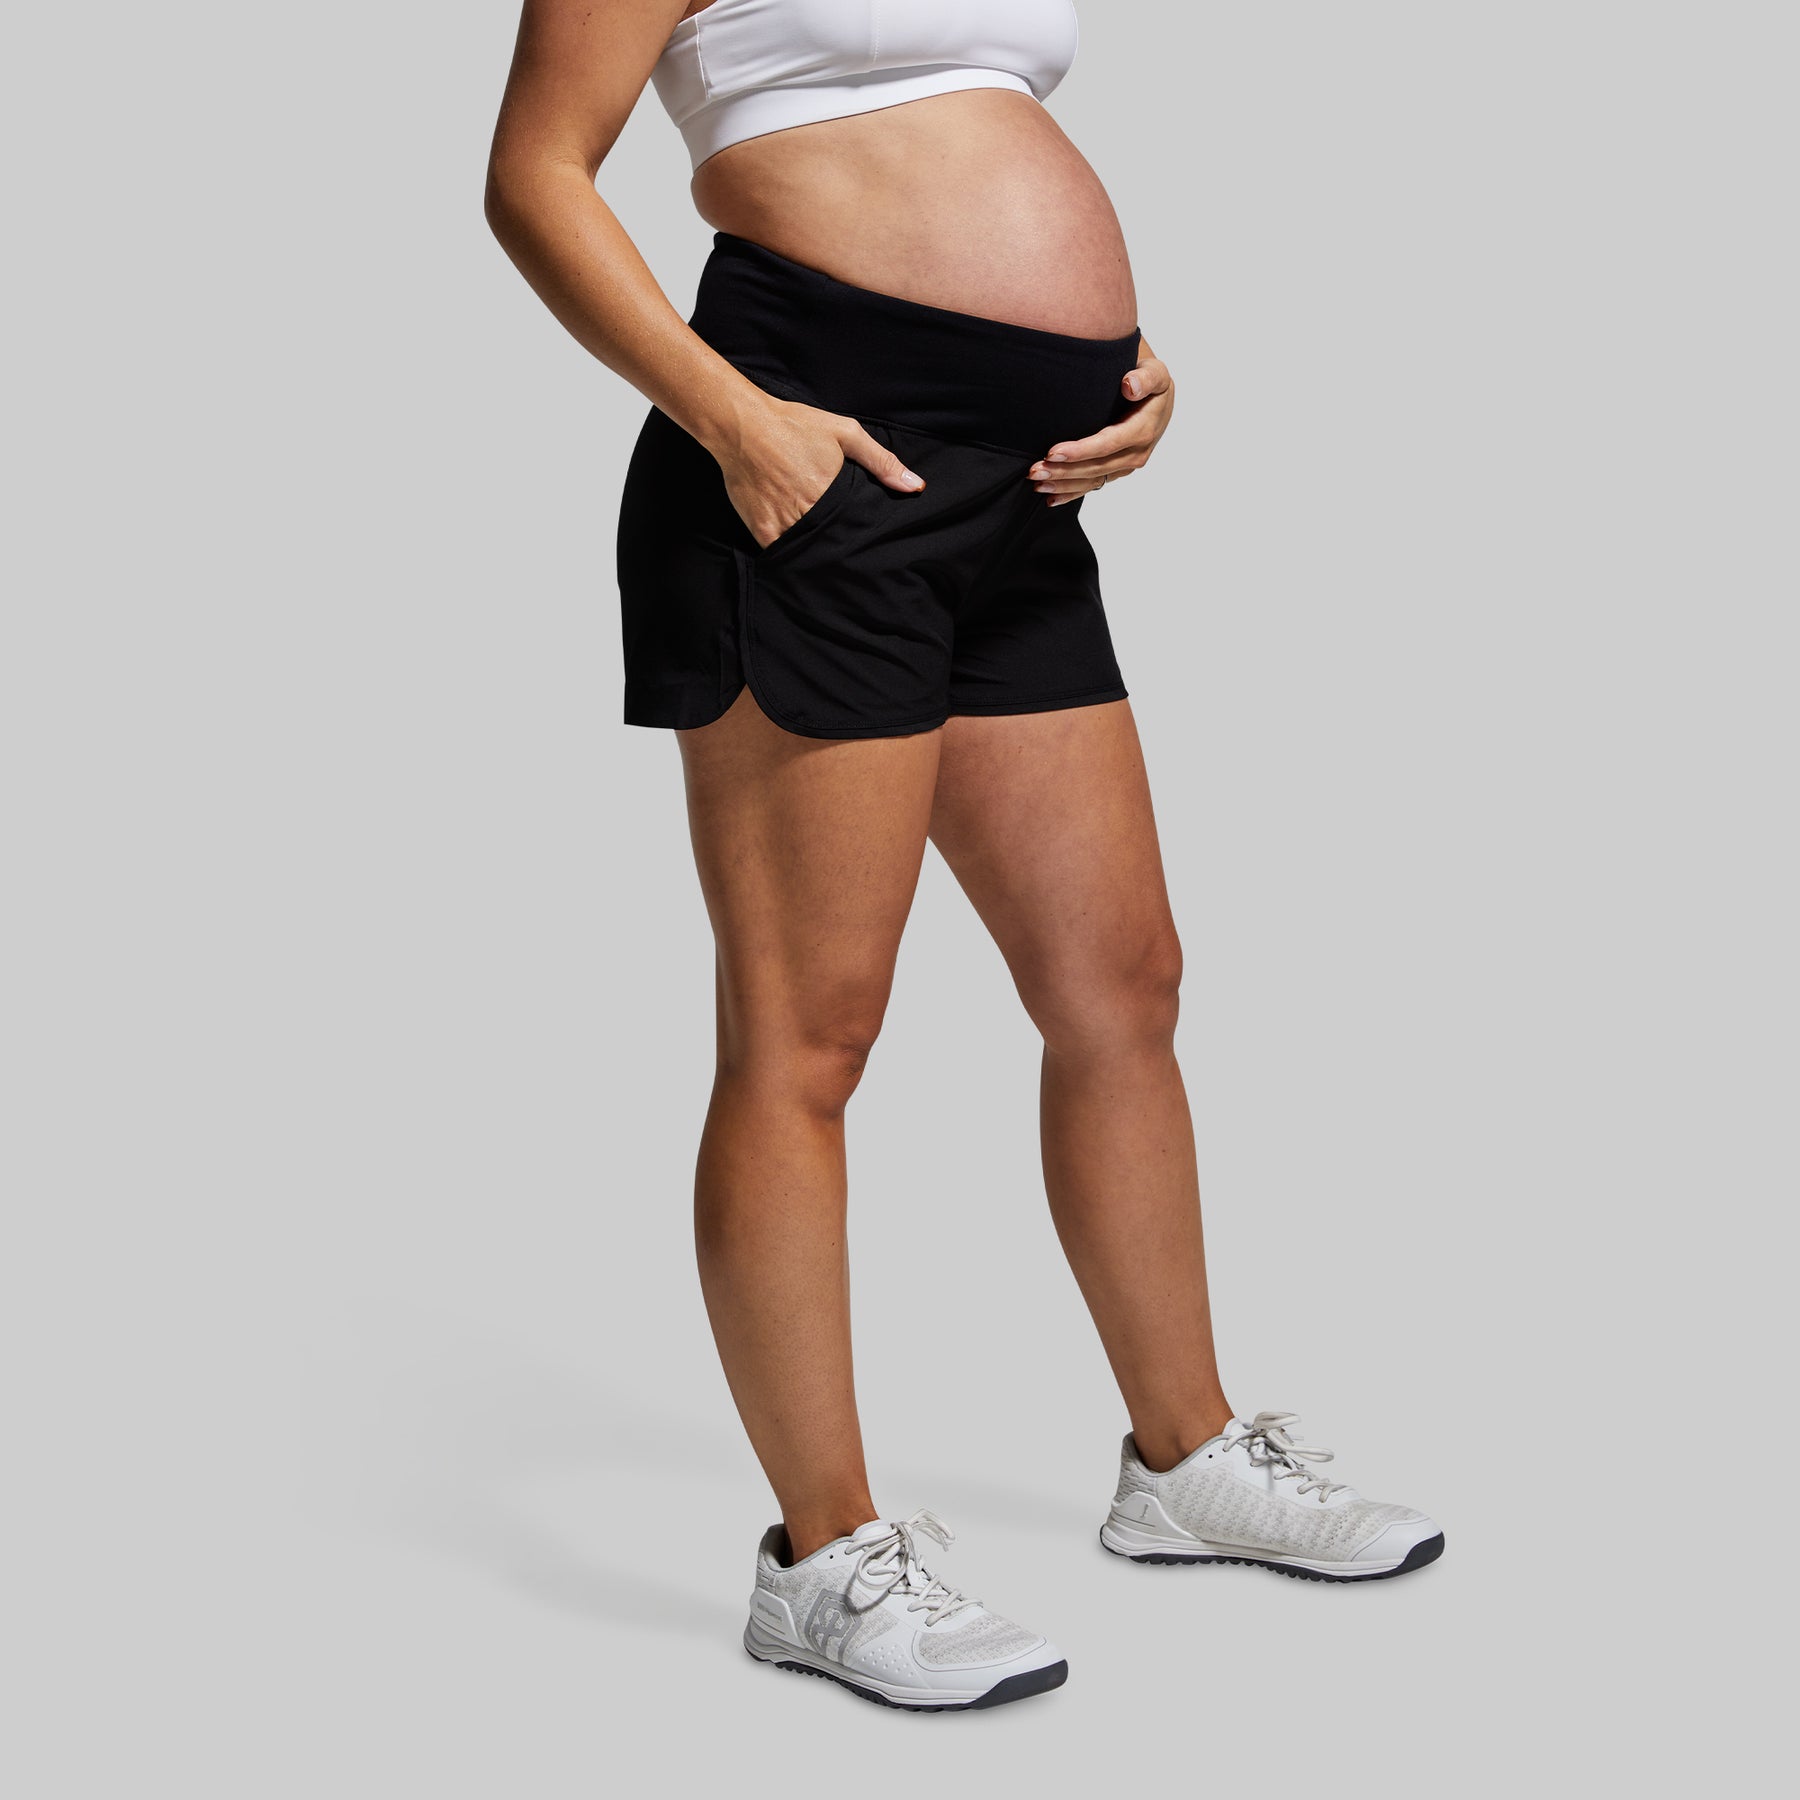 Black Maternity Shorts  Pregnancy Workout Shorts – Born Primitive